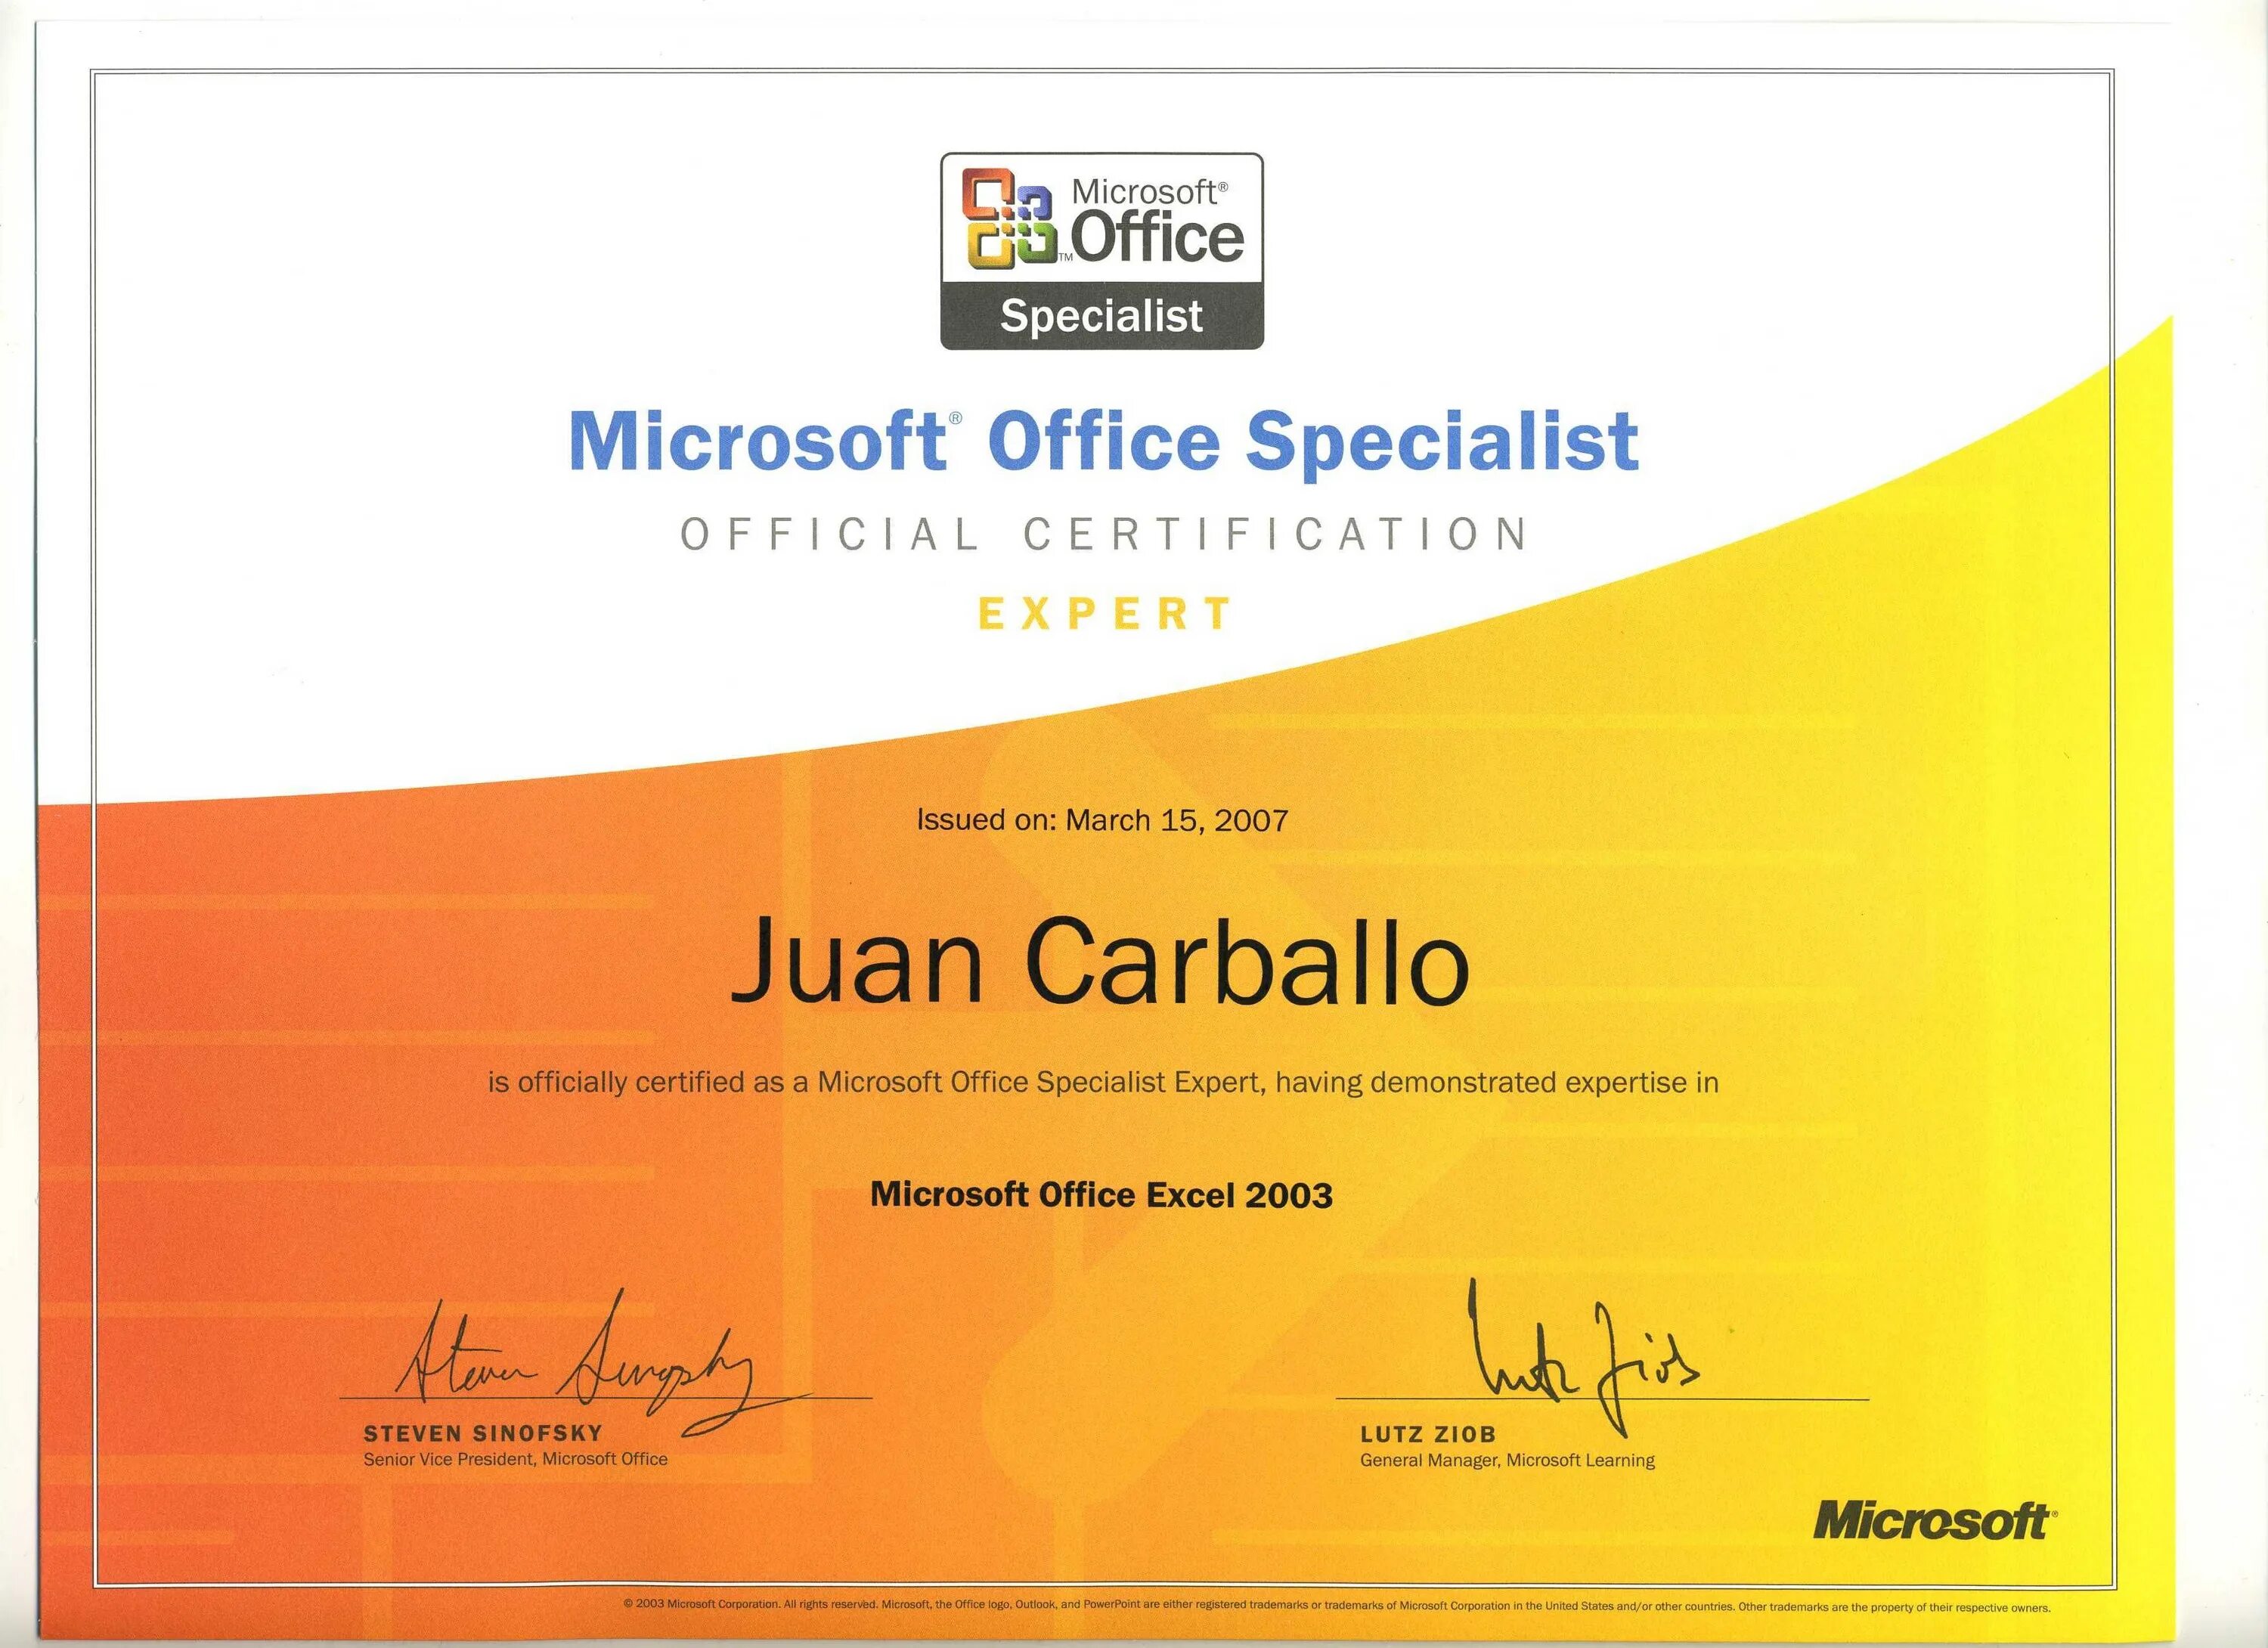 Microsoft certificate. Microsoft Office Certificate. Майкрософт офис сертификат. Сертификация Microsoft.